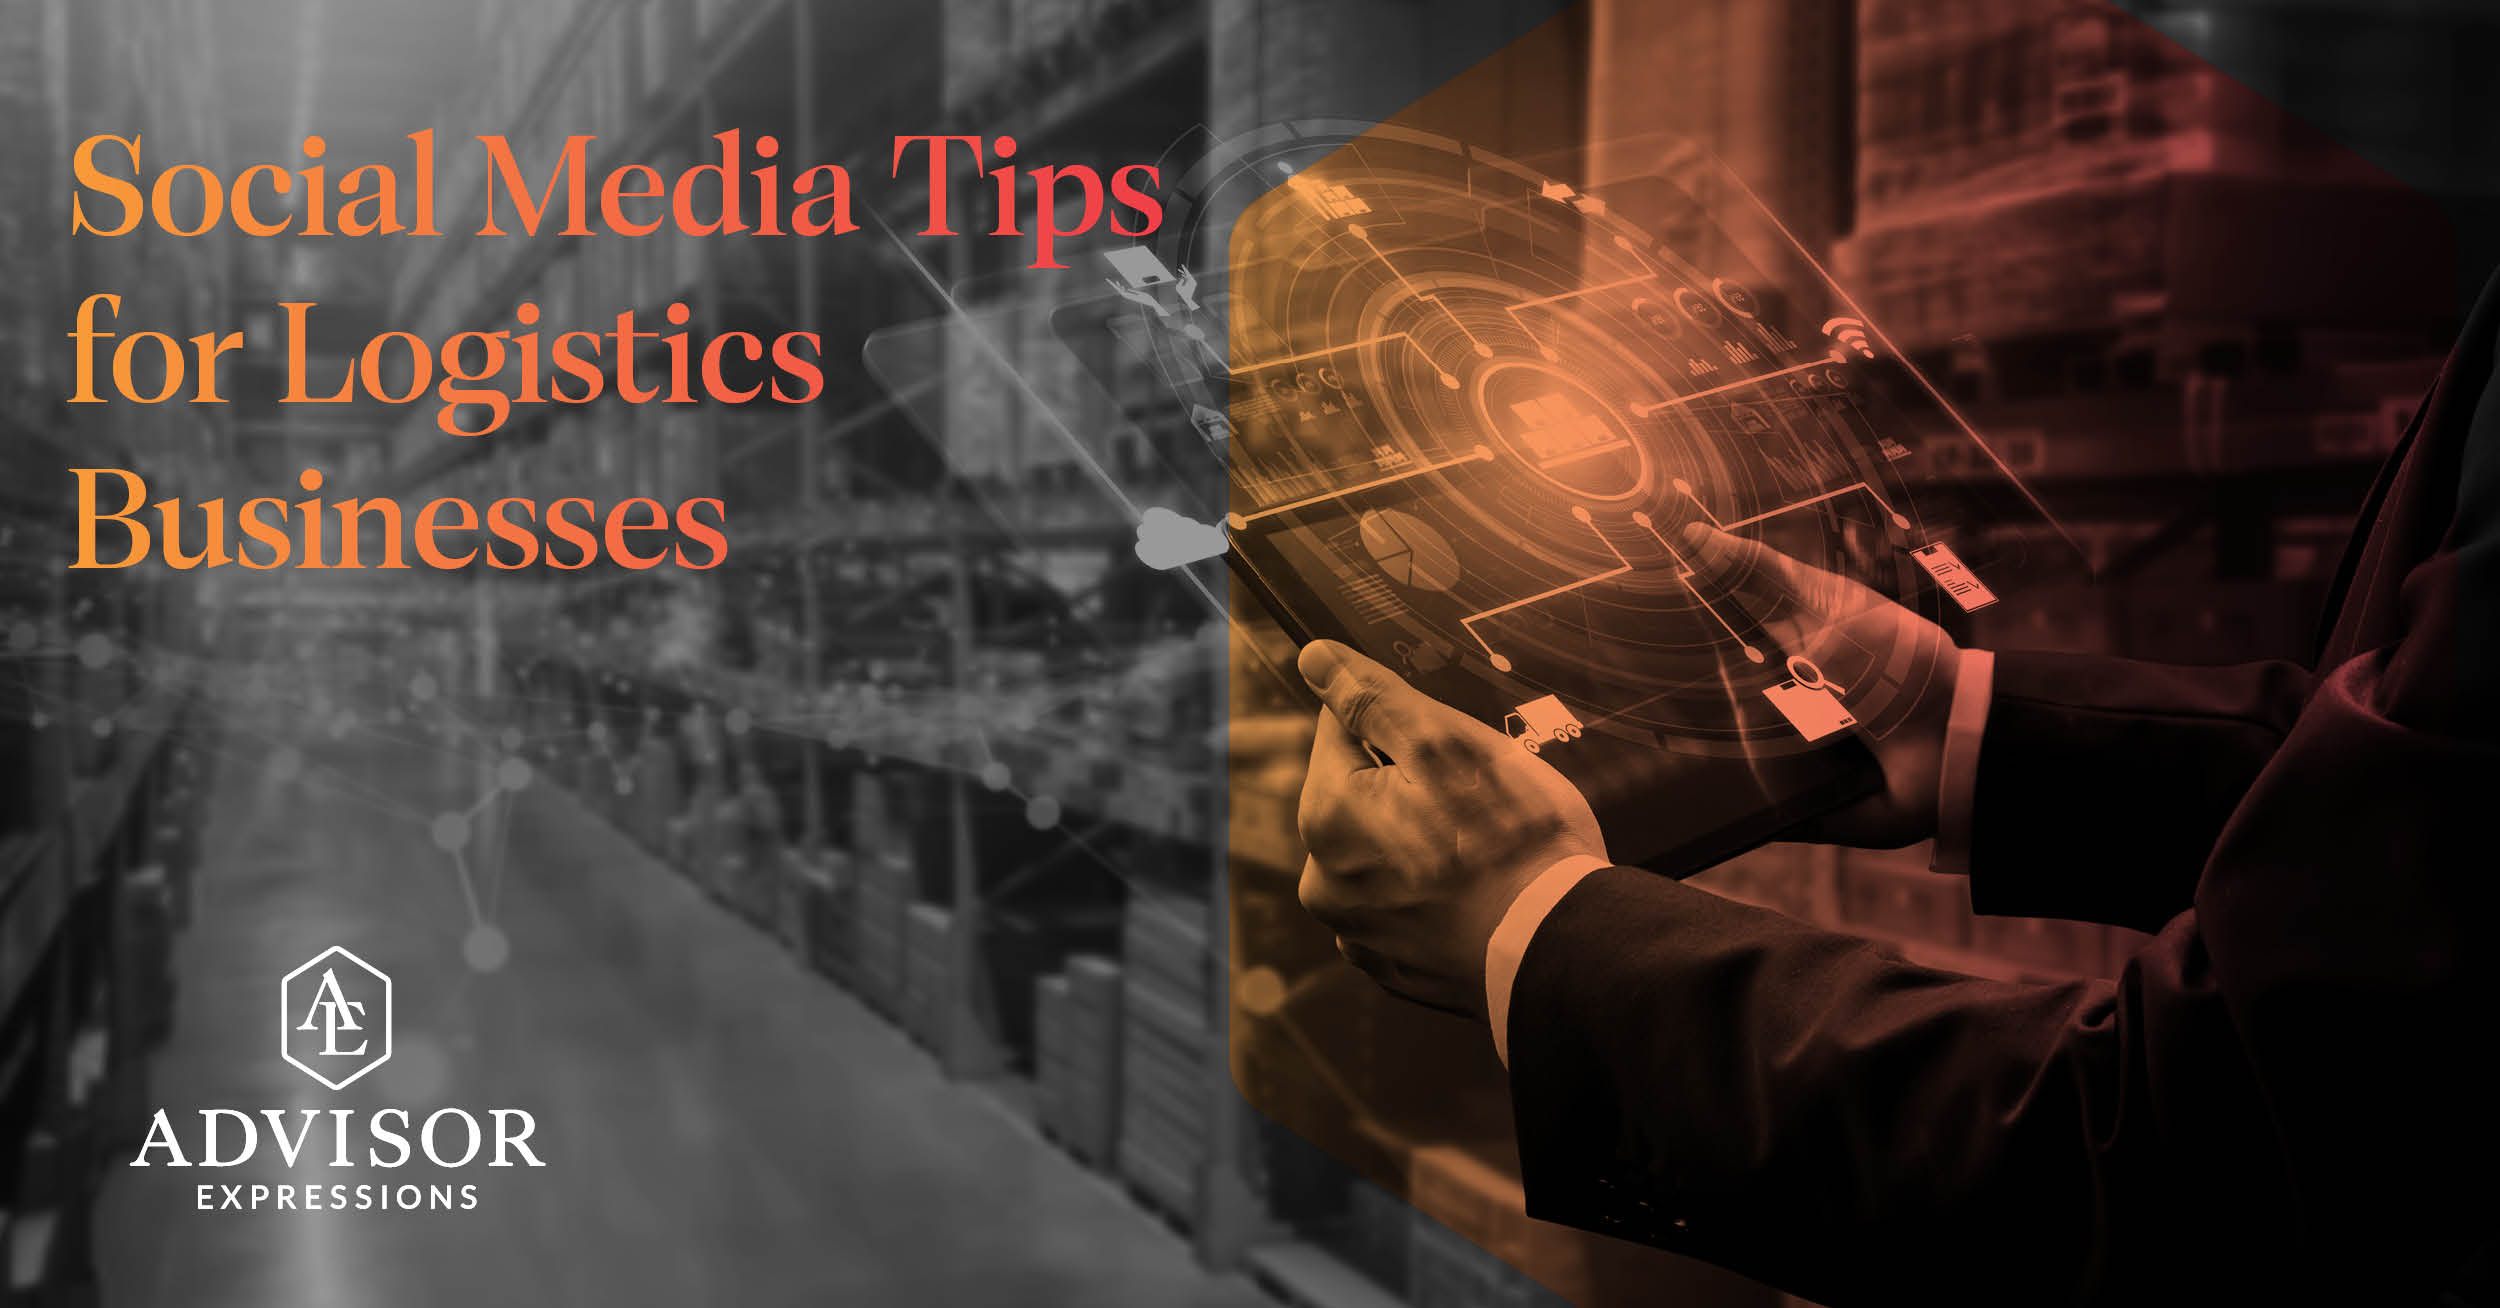 Social Media Tips for Logistics Businesses 